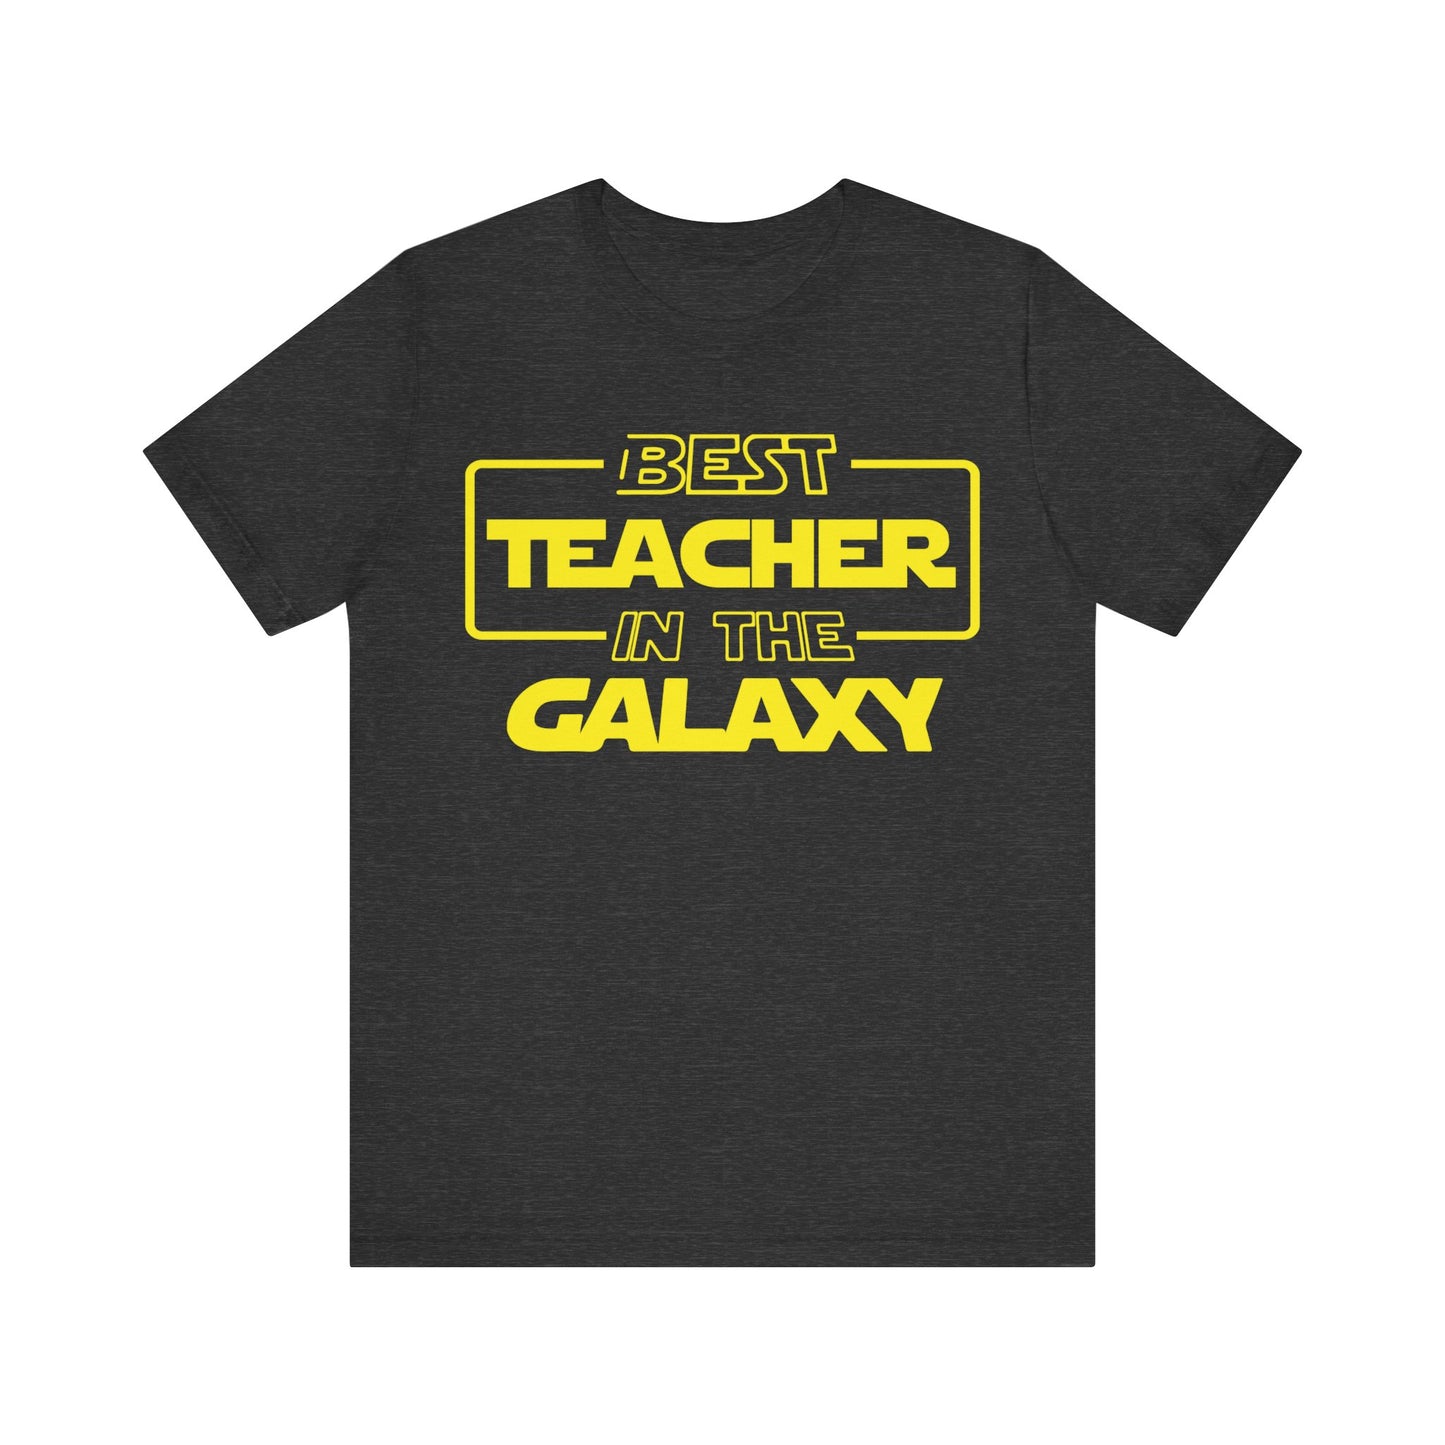 Best Teacher in the Galaxy Tee